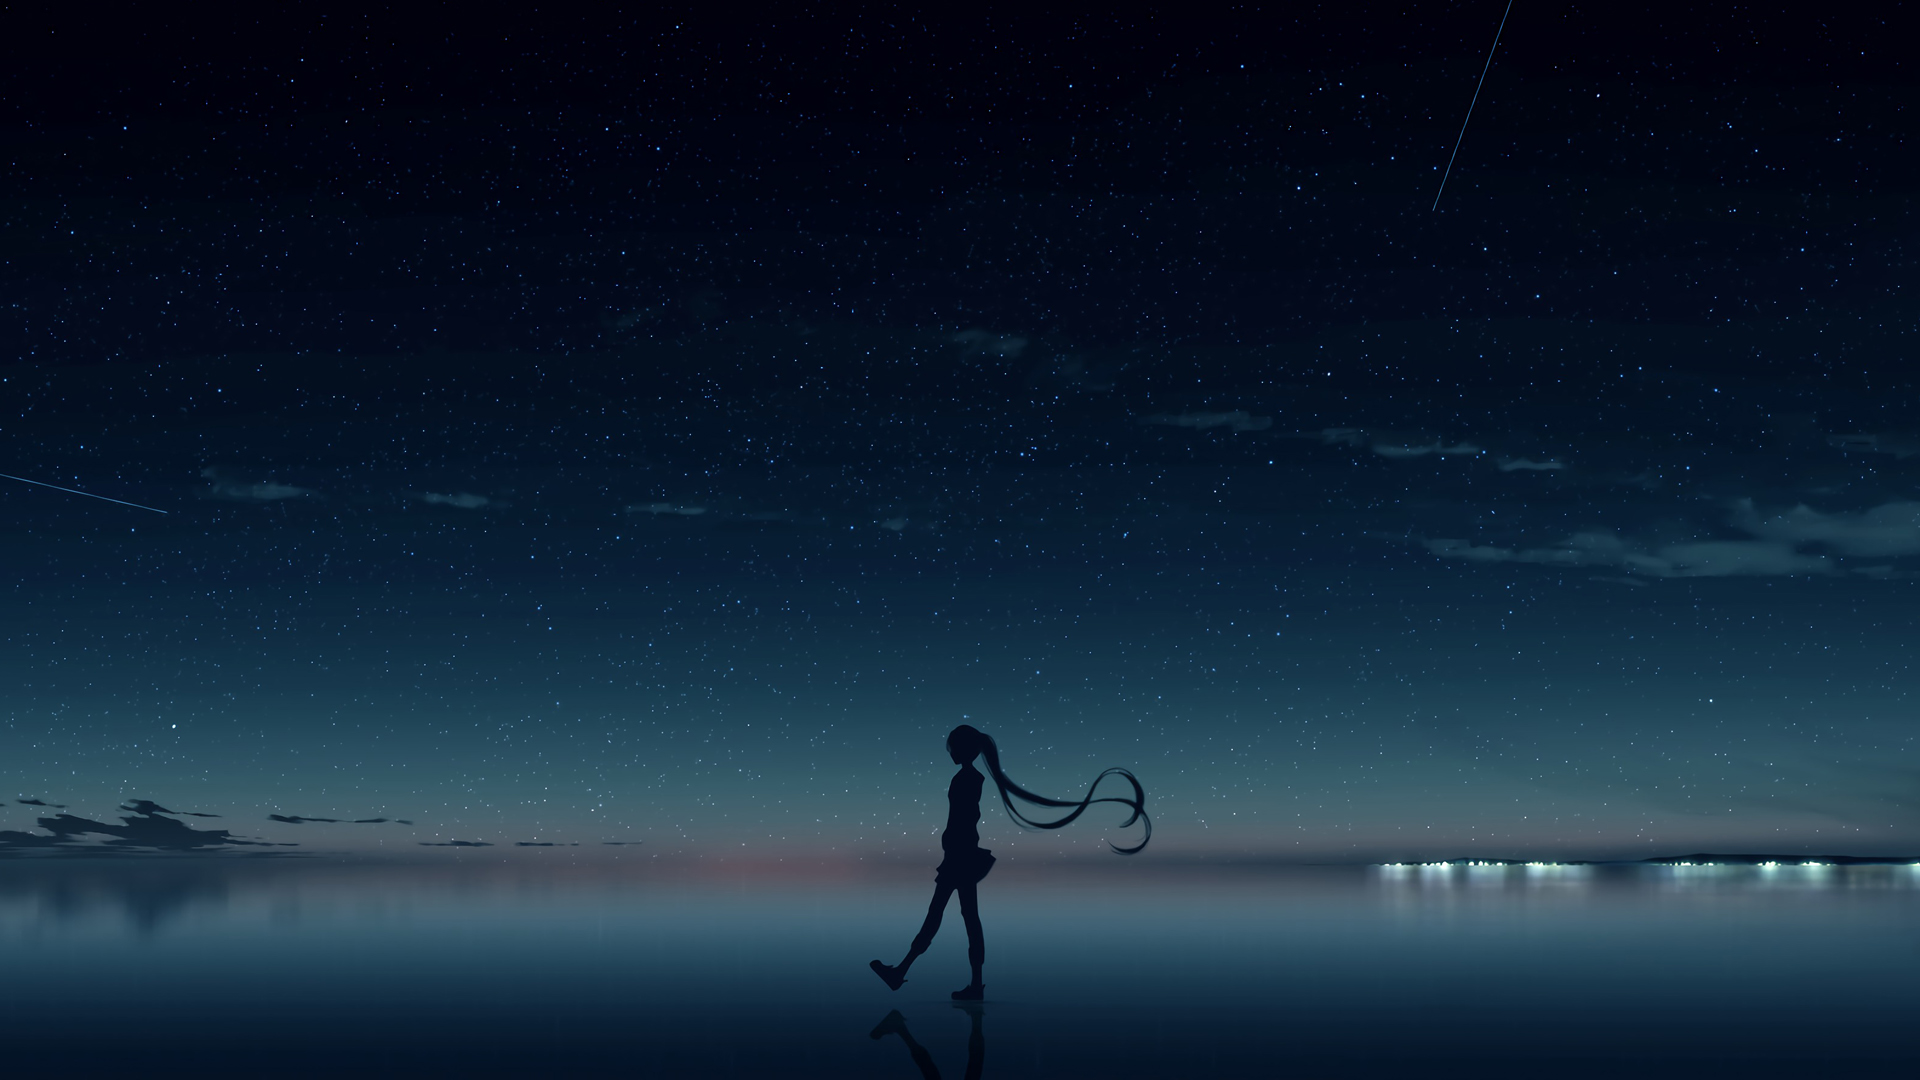 Anime 1920x1080 anime anime girls Hatsune Miku Vocaloid reflection walking starry night starred sky long hair twintails sky stars wind skirt silhouette